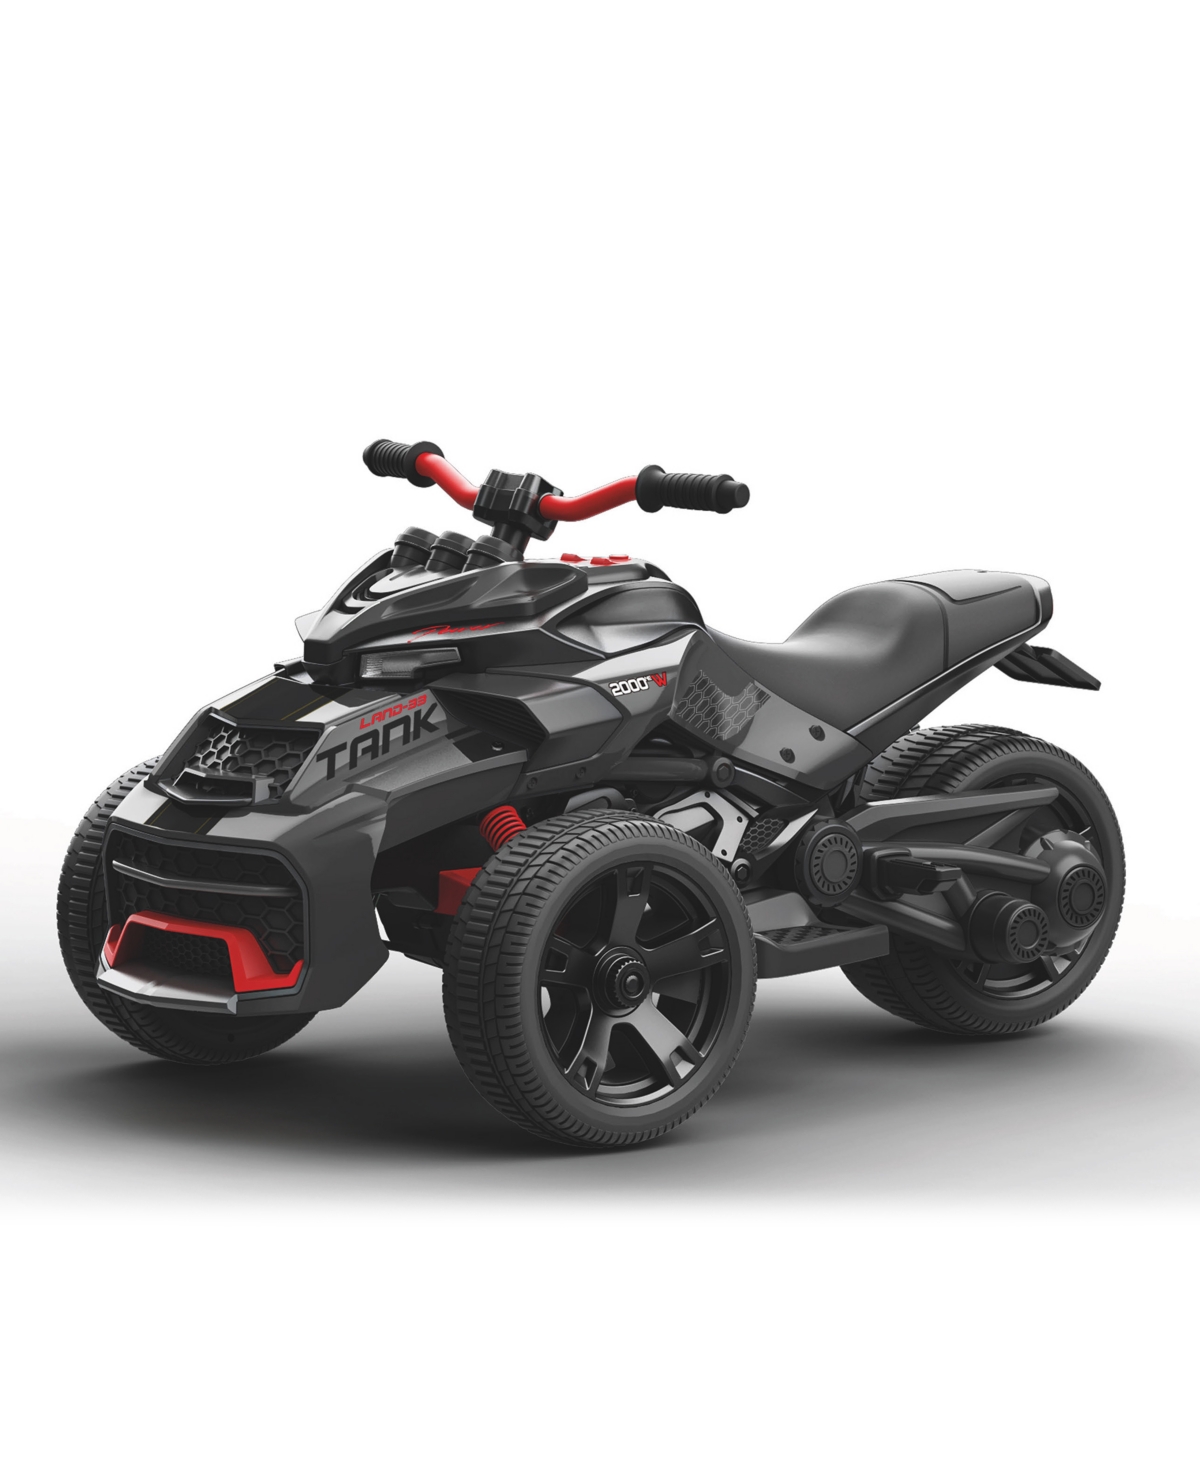 Freddo Spider 2-seater 3 Wheel Motorcycle Ride On In Black